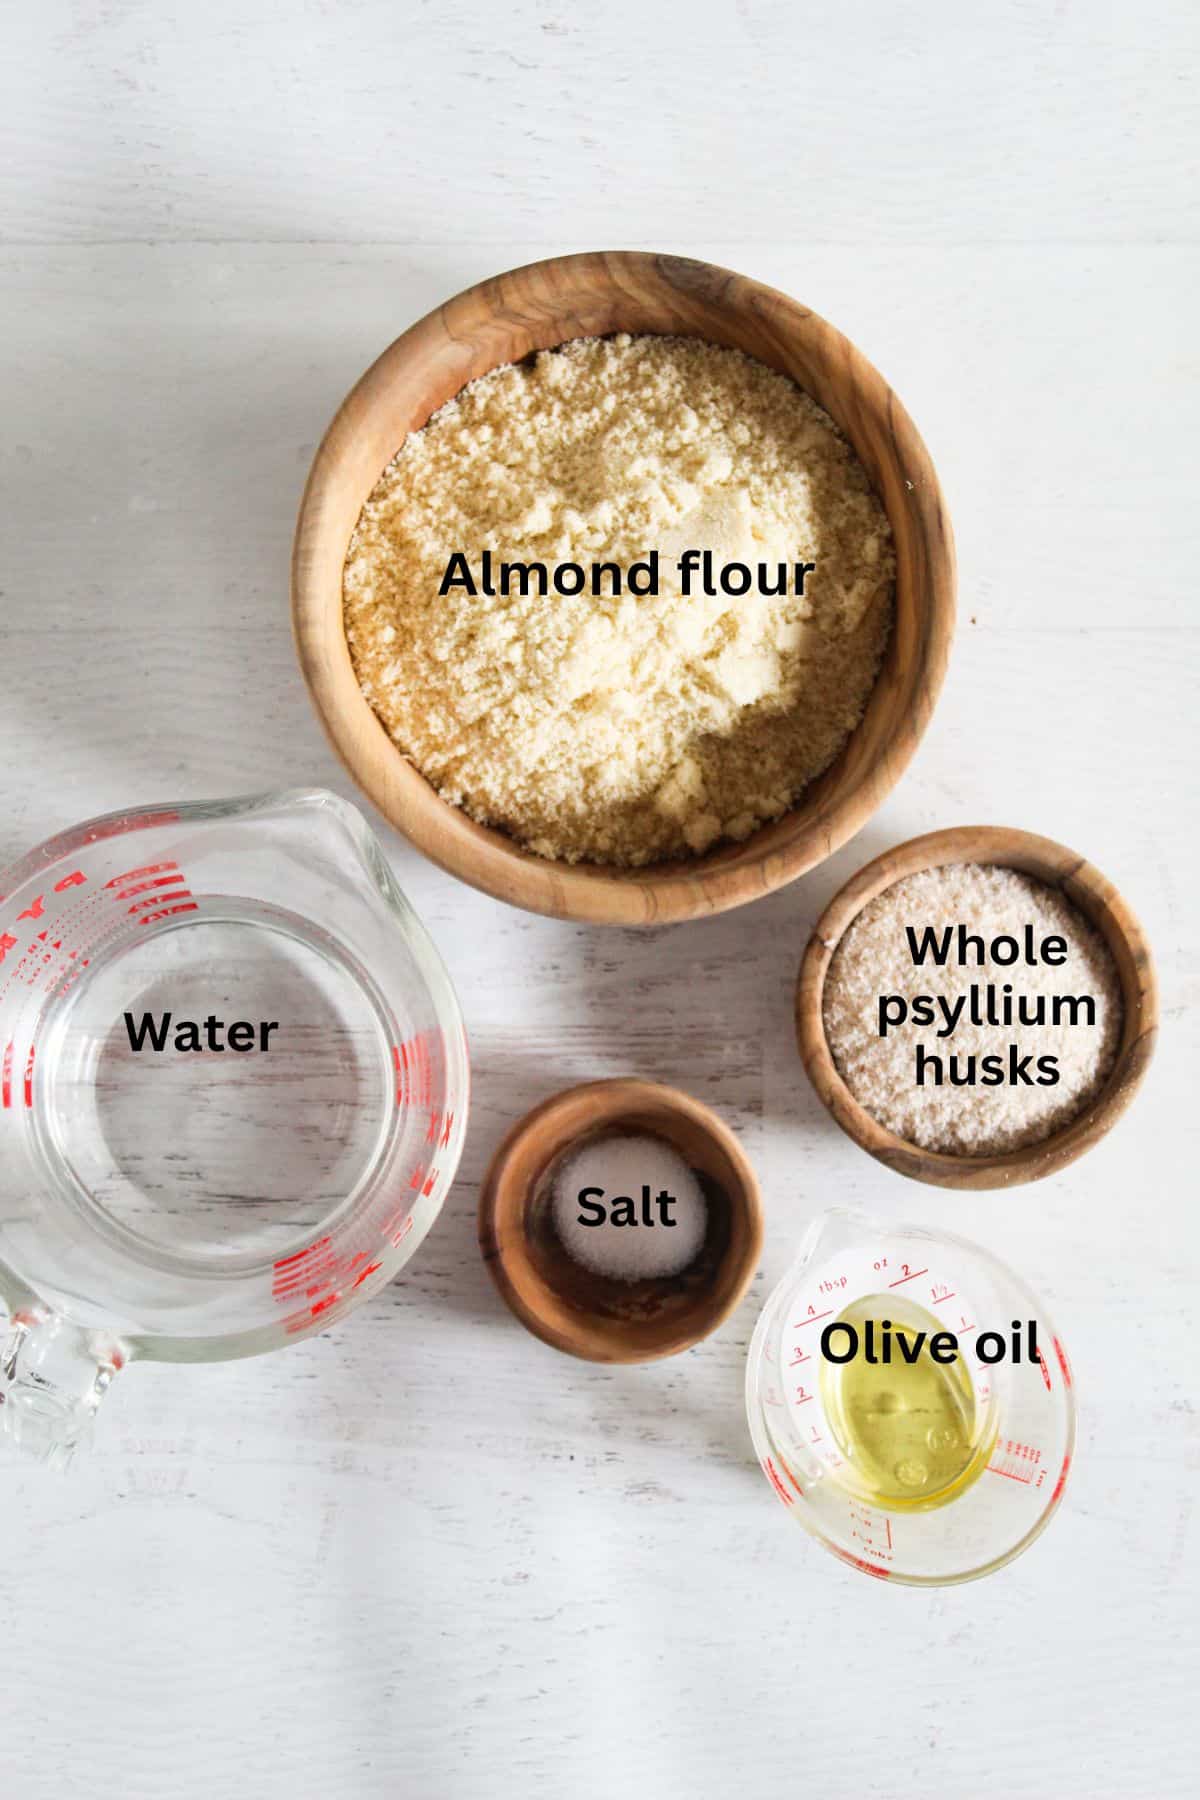 ingredients to make almond flour tortillas from scratch.